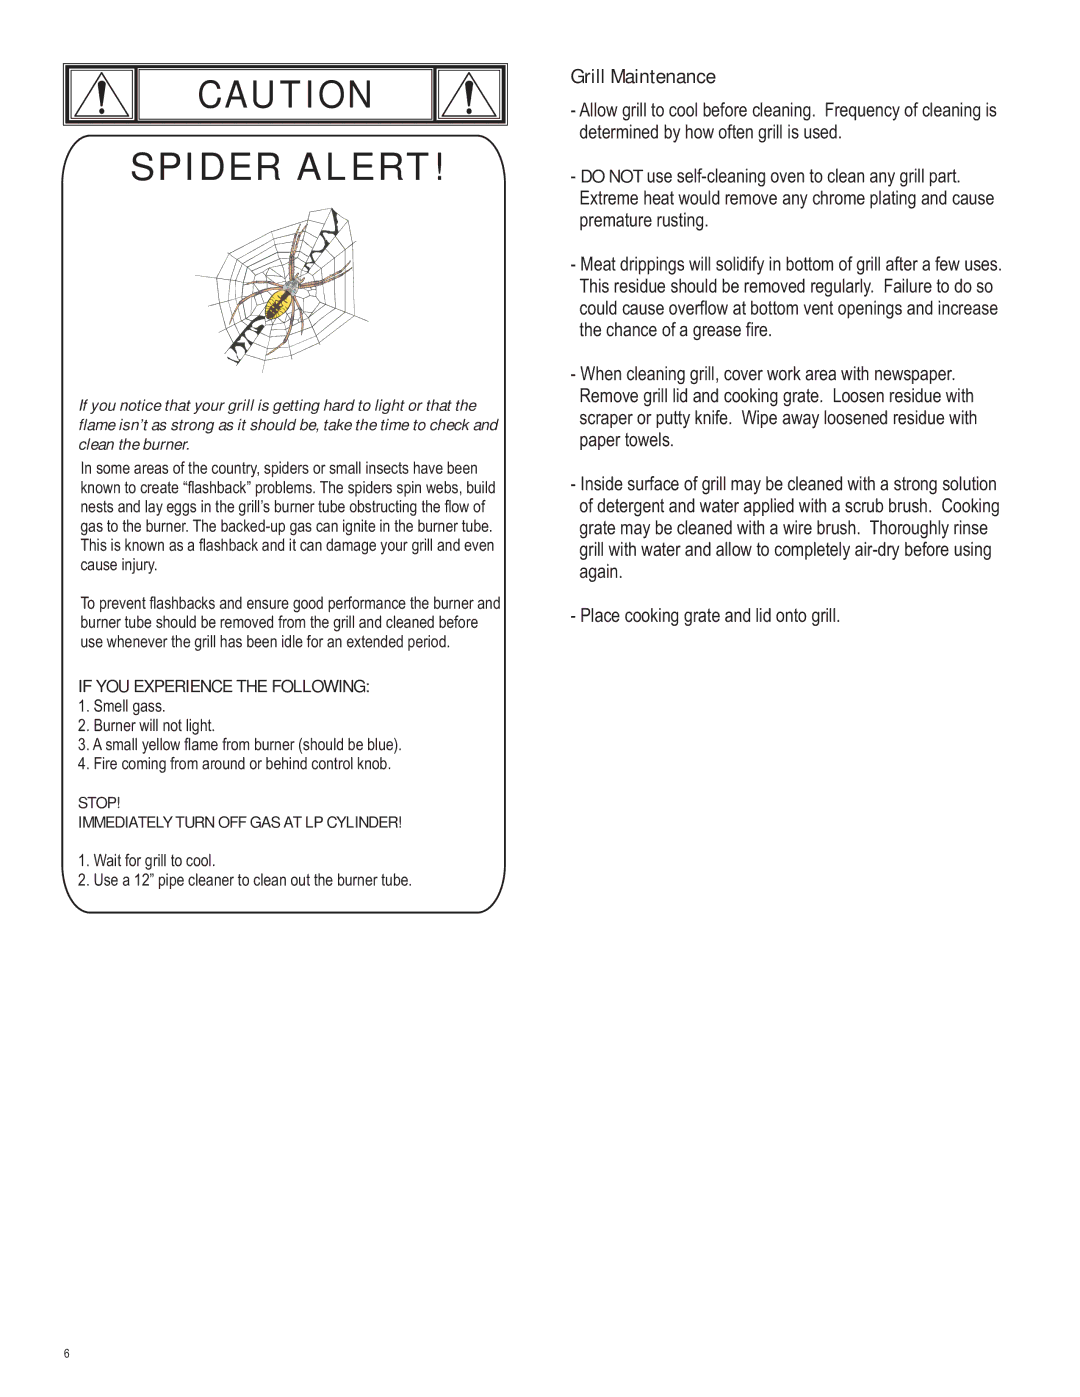 Char-Broil 4651330 manual Spider Alert, Grill Maintenance 